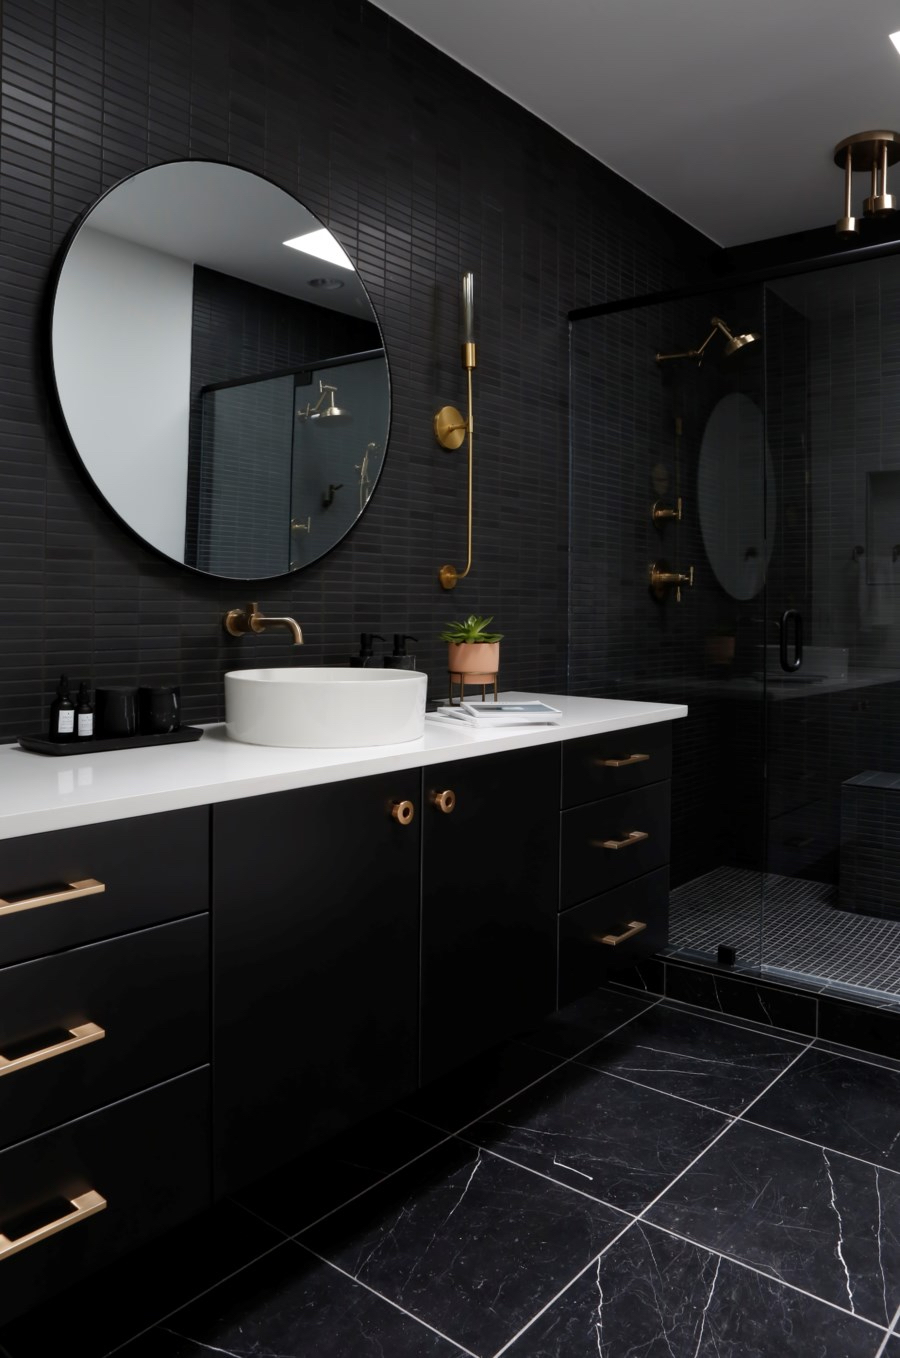 8 All-Black Bathroom Design Ideas That Effortlessly Amp Up the Drama